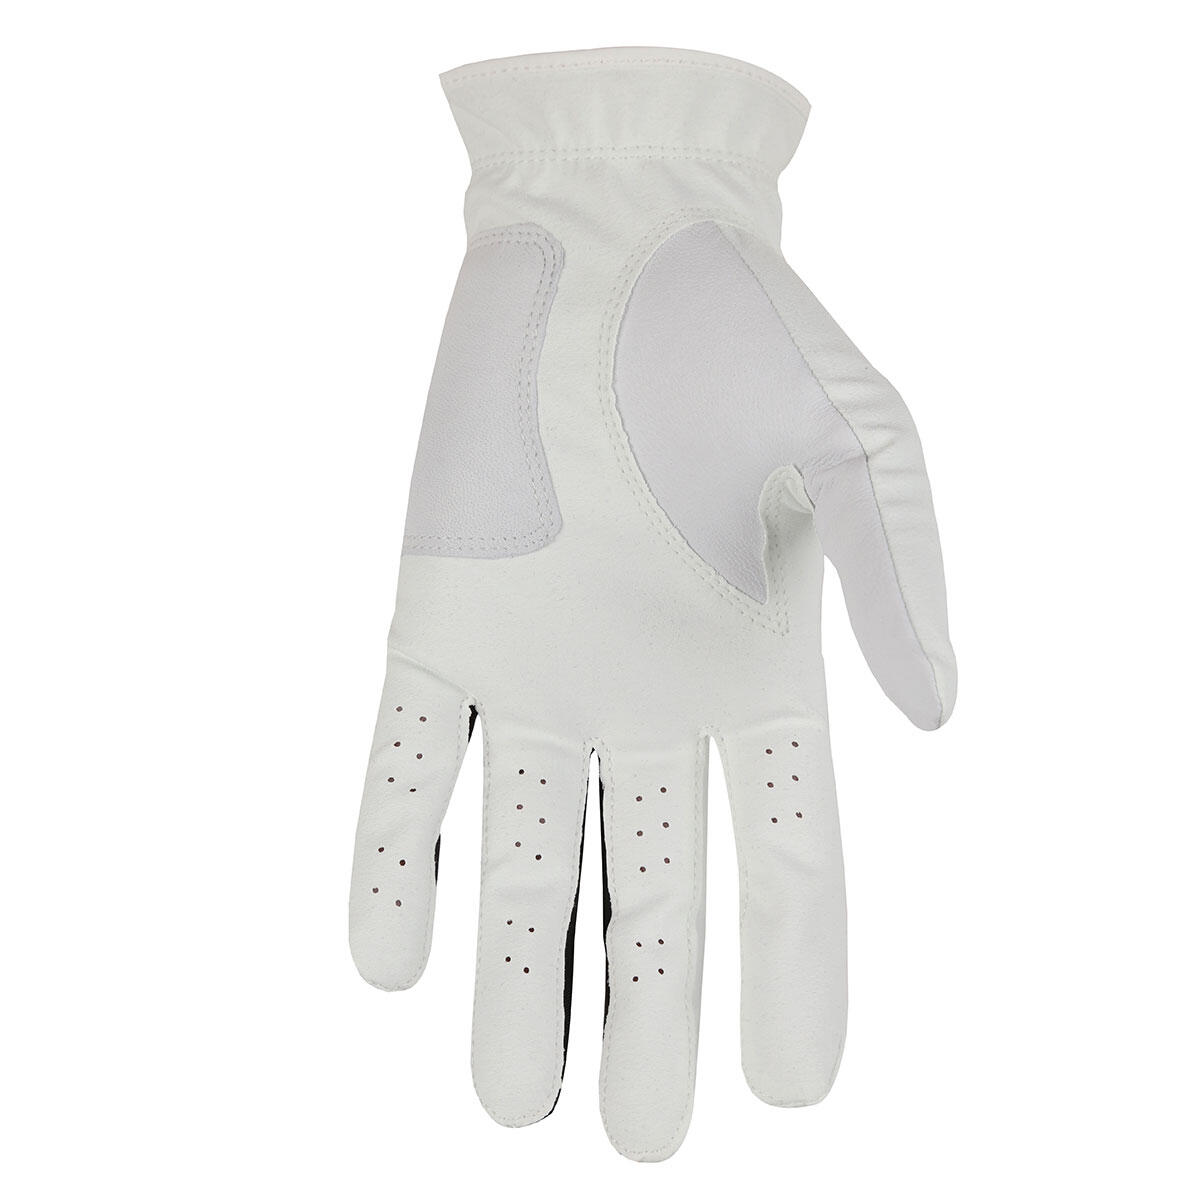 Rife RX Hybrid Glove 2/4